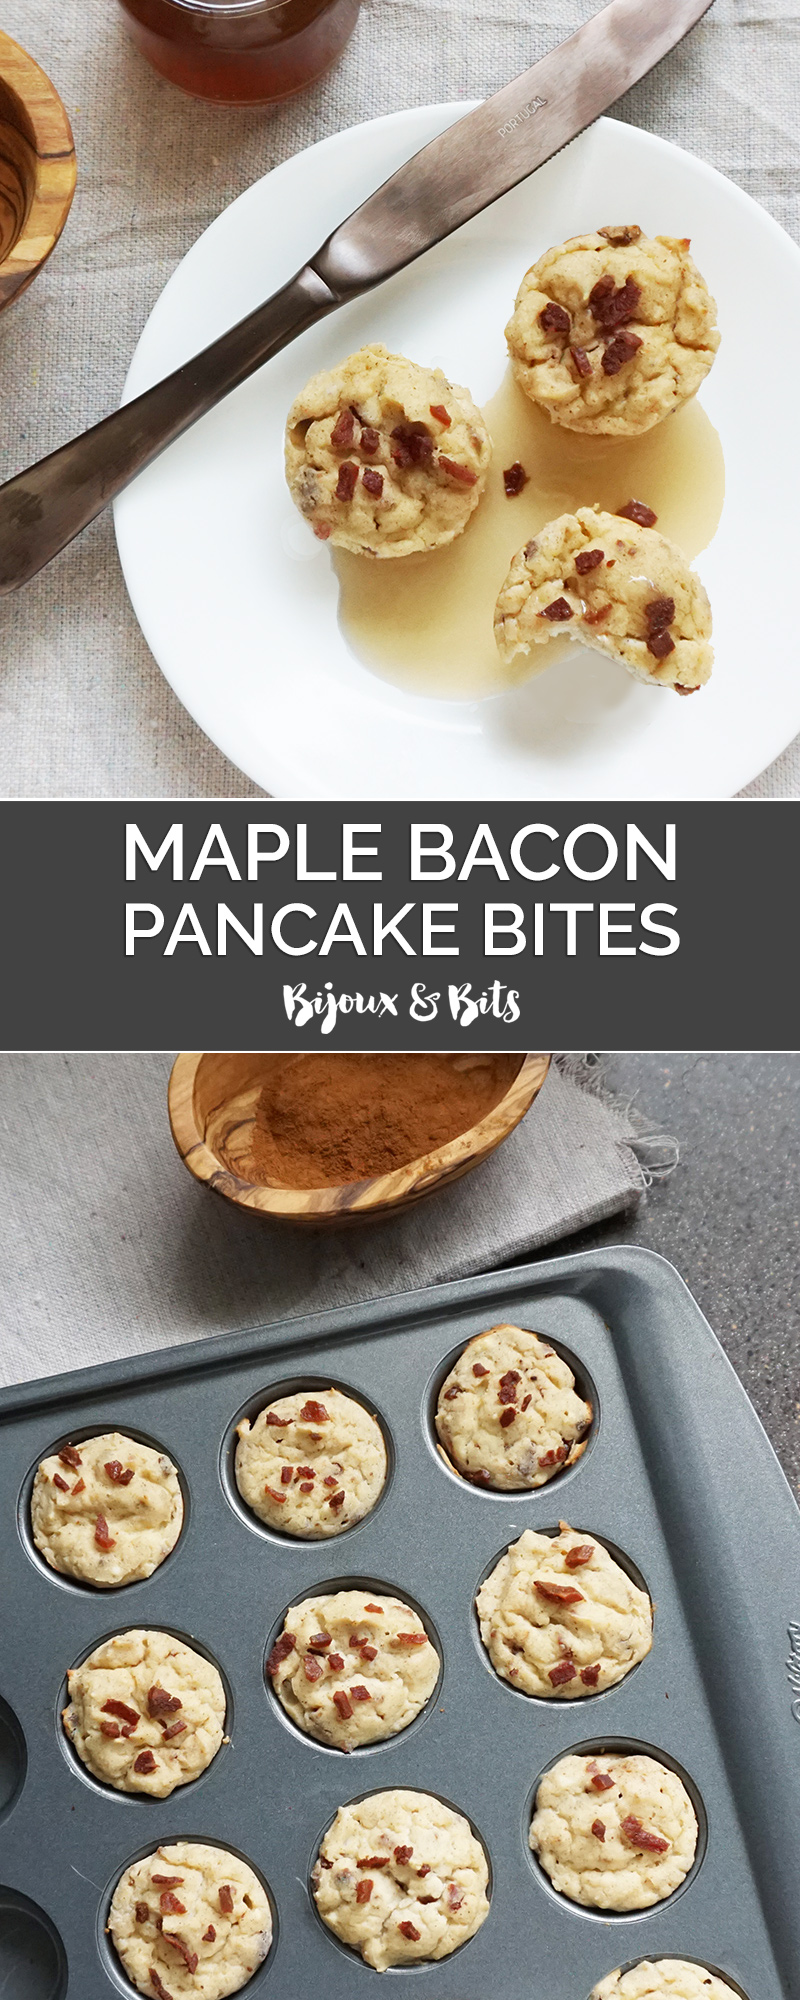 Maple bacon pancake bites from @bijouxandbits